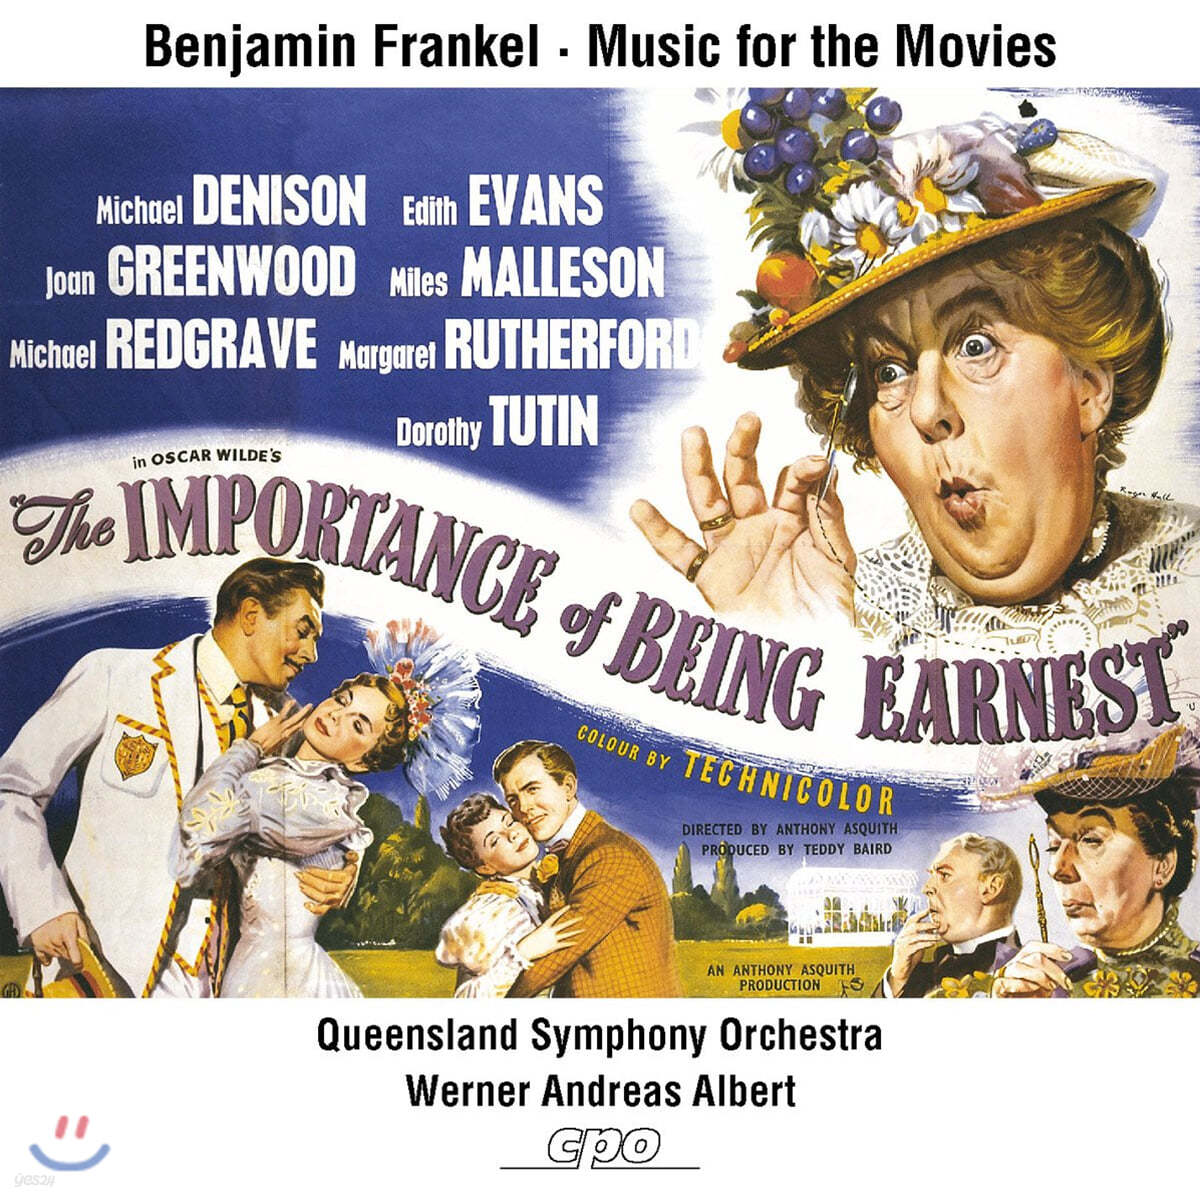 Werner Andreas Albert 프란켈 : 영화음악 베스트 (Benjamin Frankel : Music for the Movies)